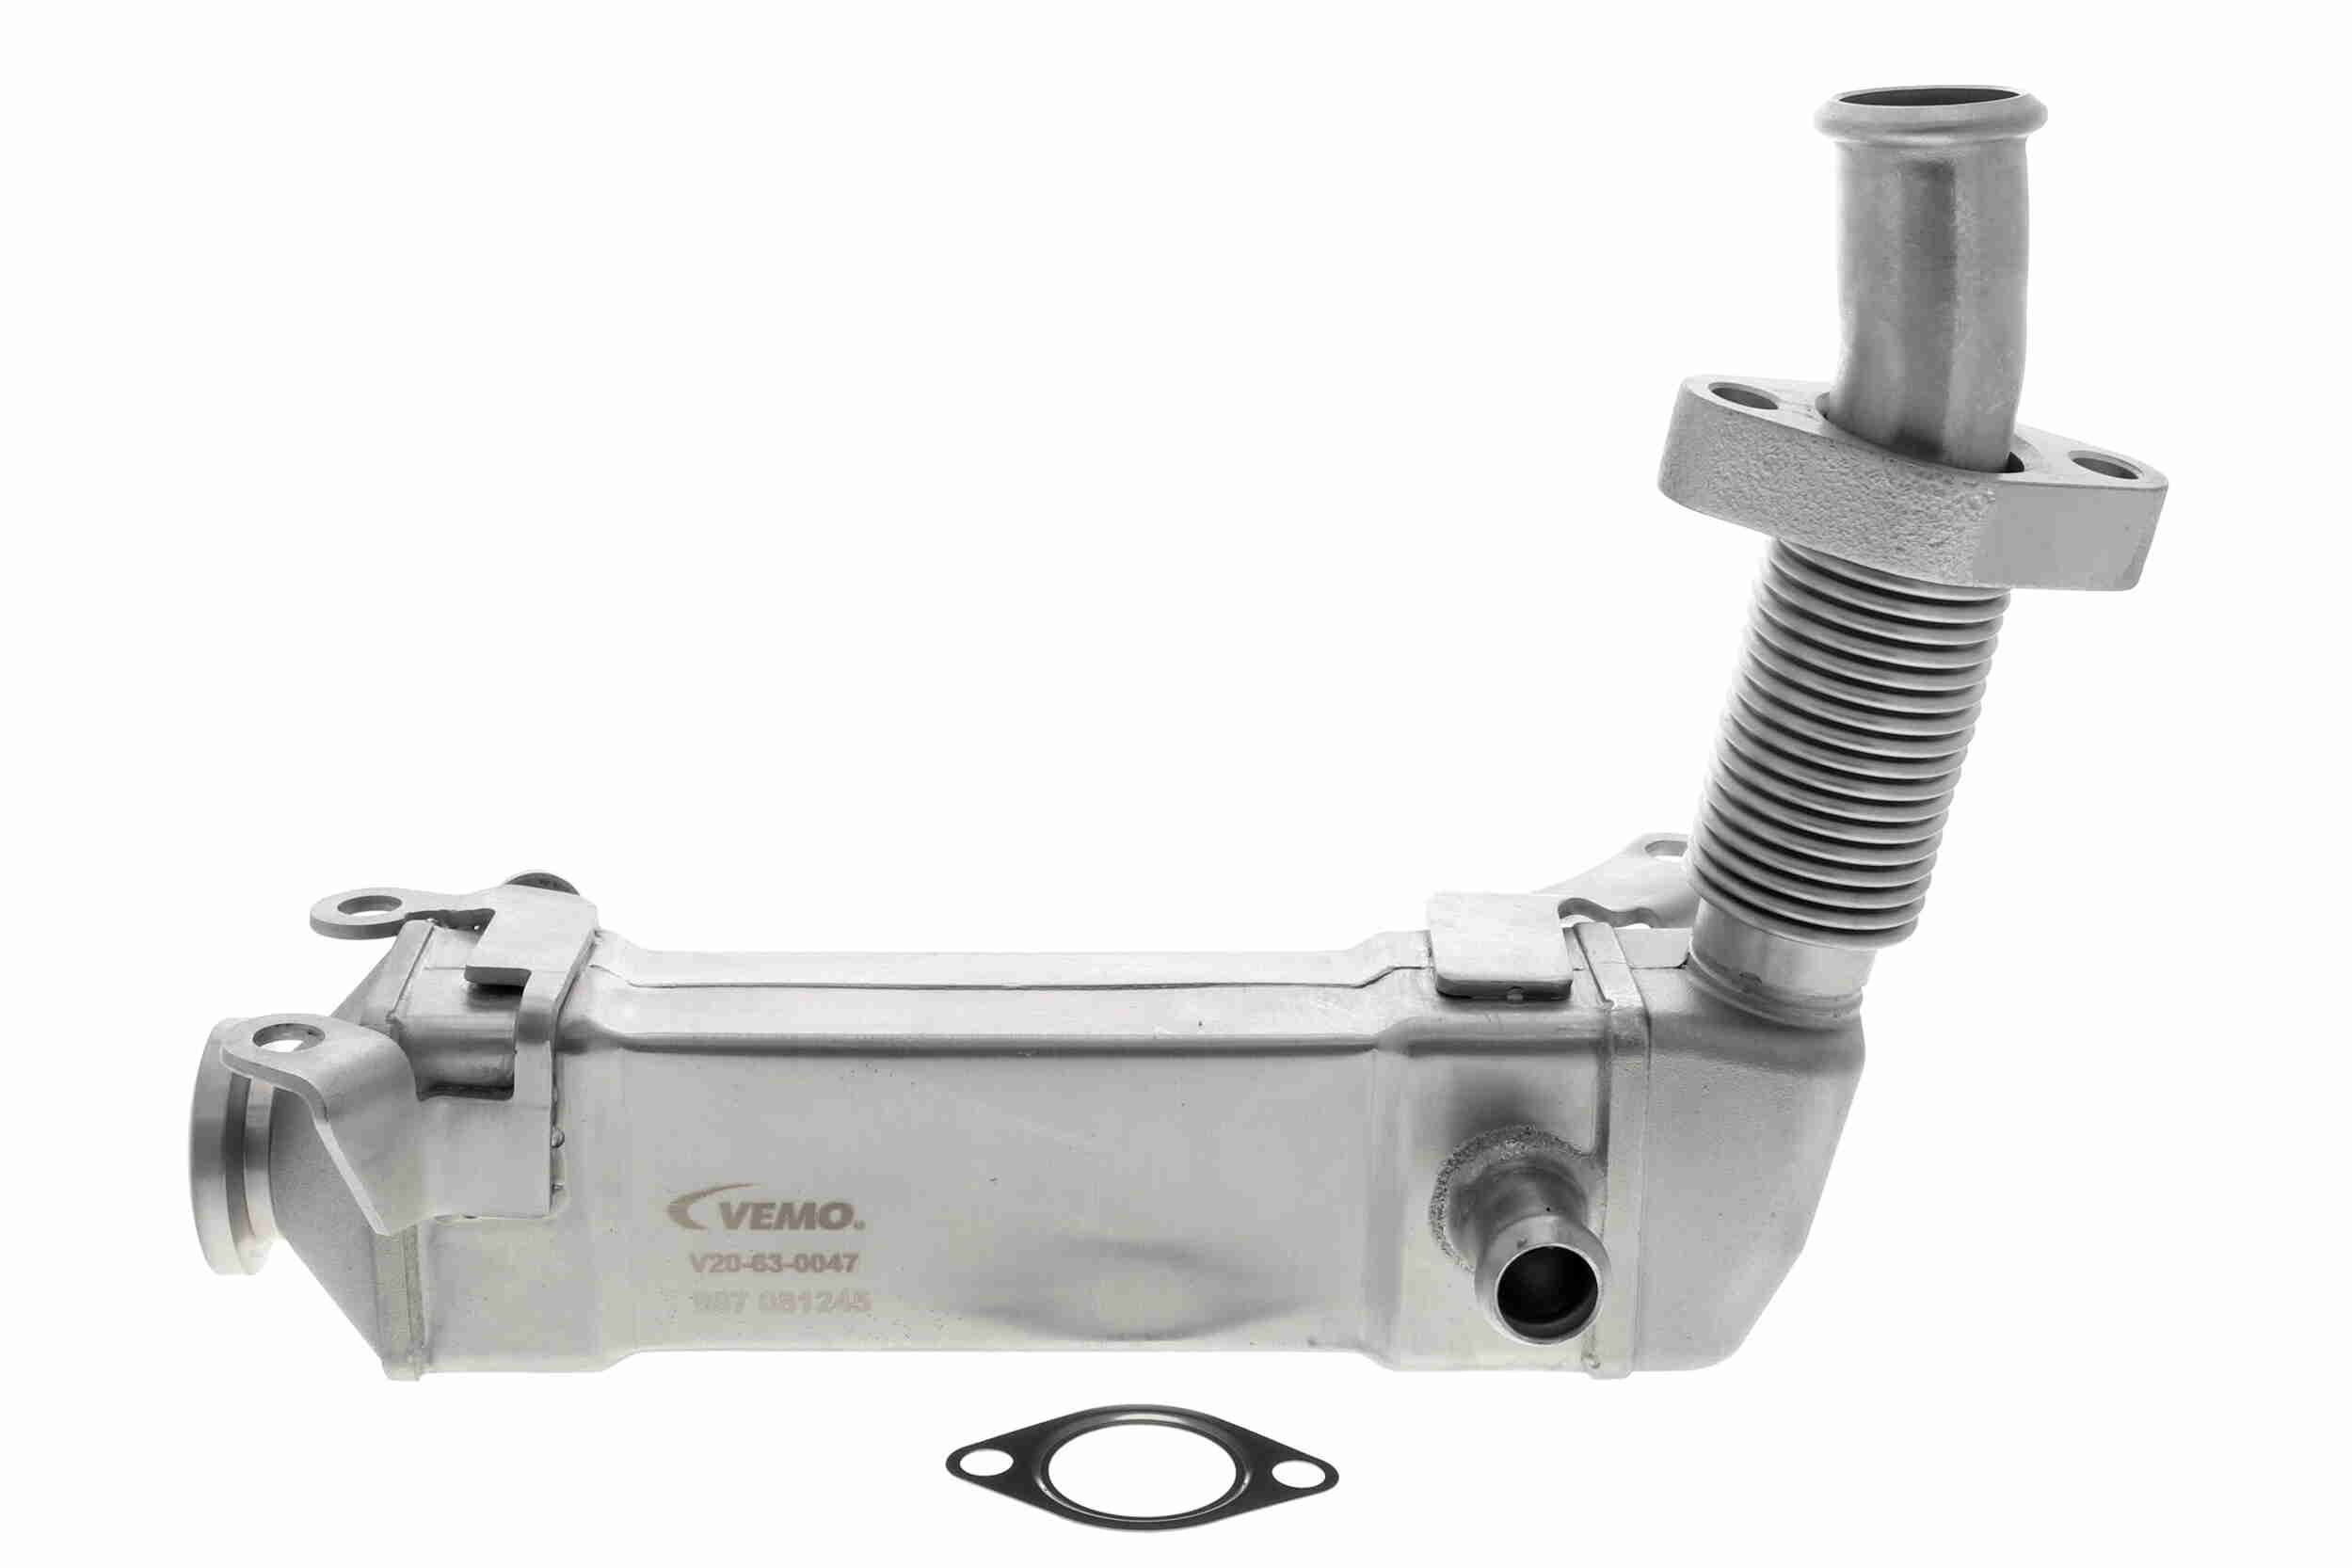 VEMO Exhaust gas recirculation cooler V20-63-0047 buy online